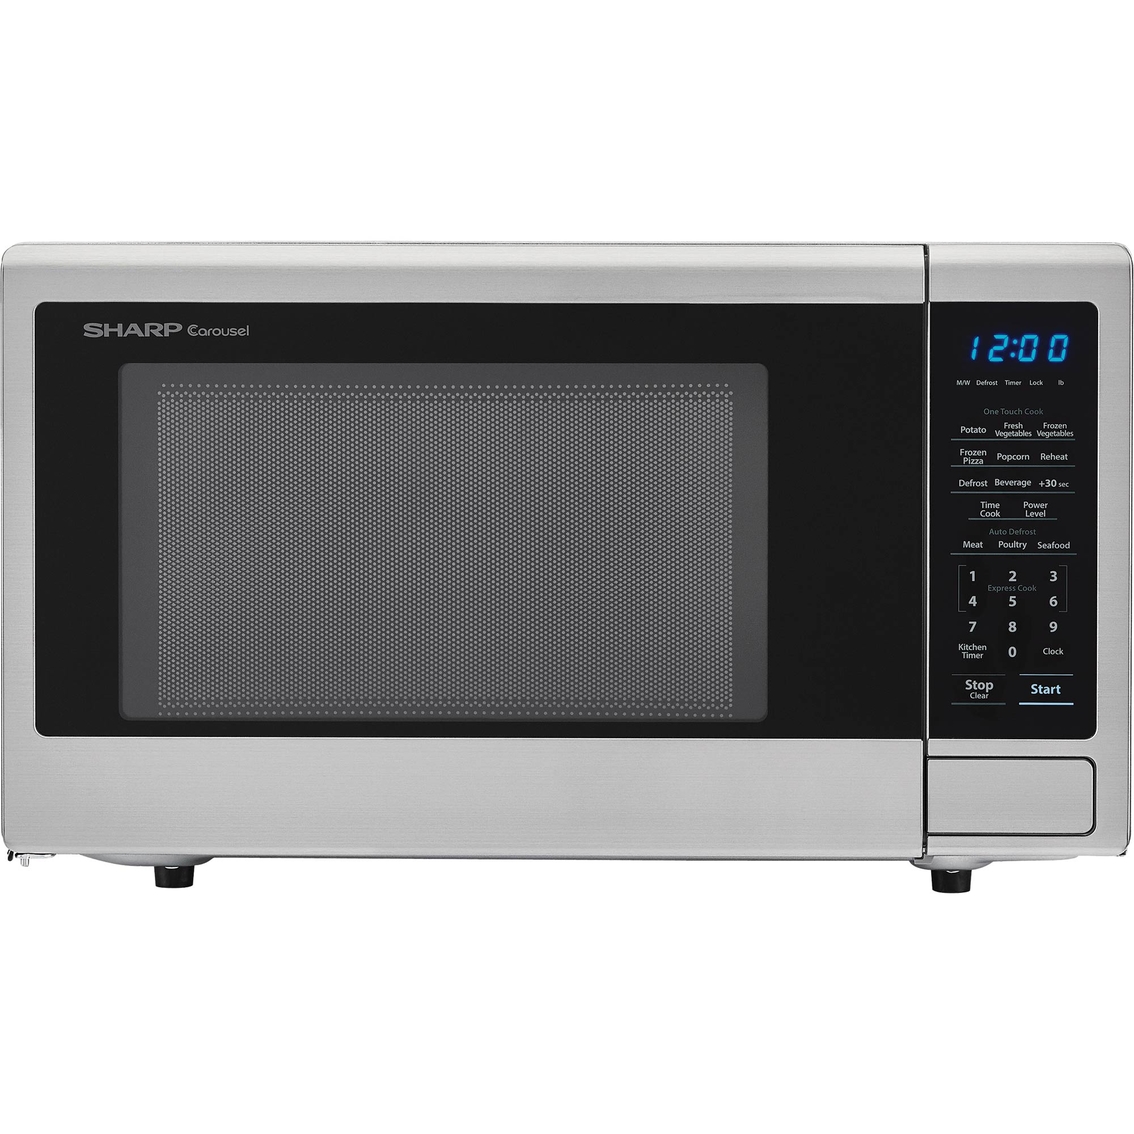 Sharp 1.1 Cu. Ft. Orville Redenbacher Certified Microwave Oven